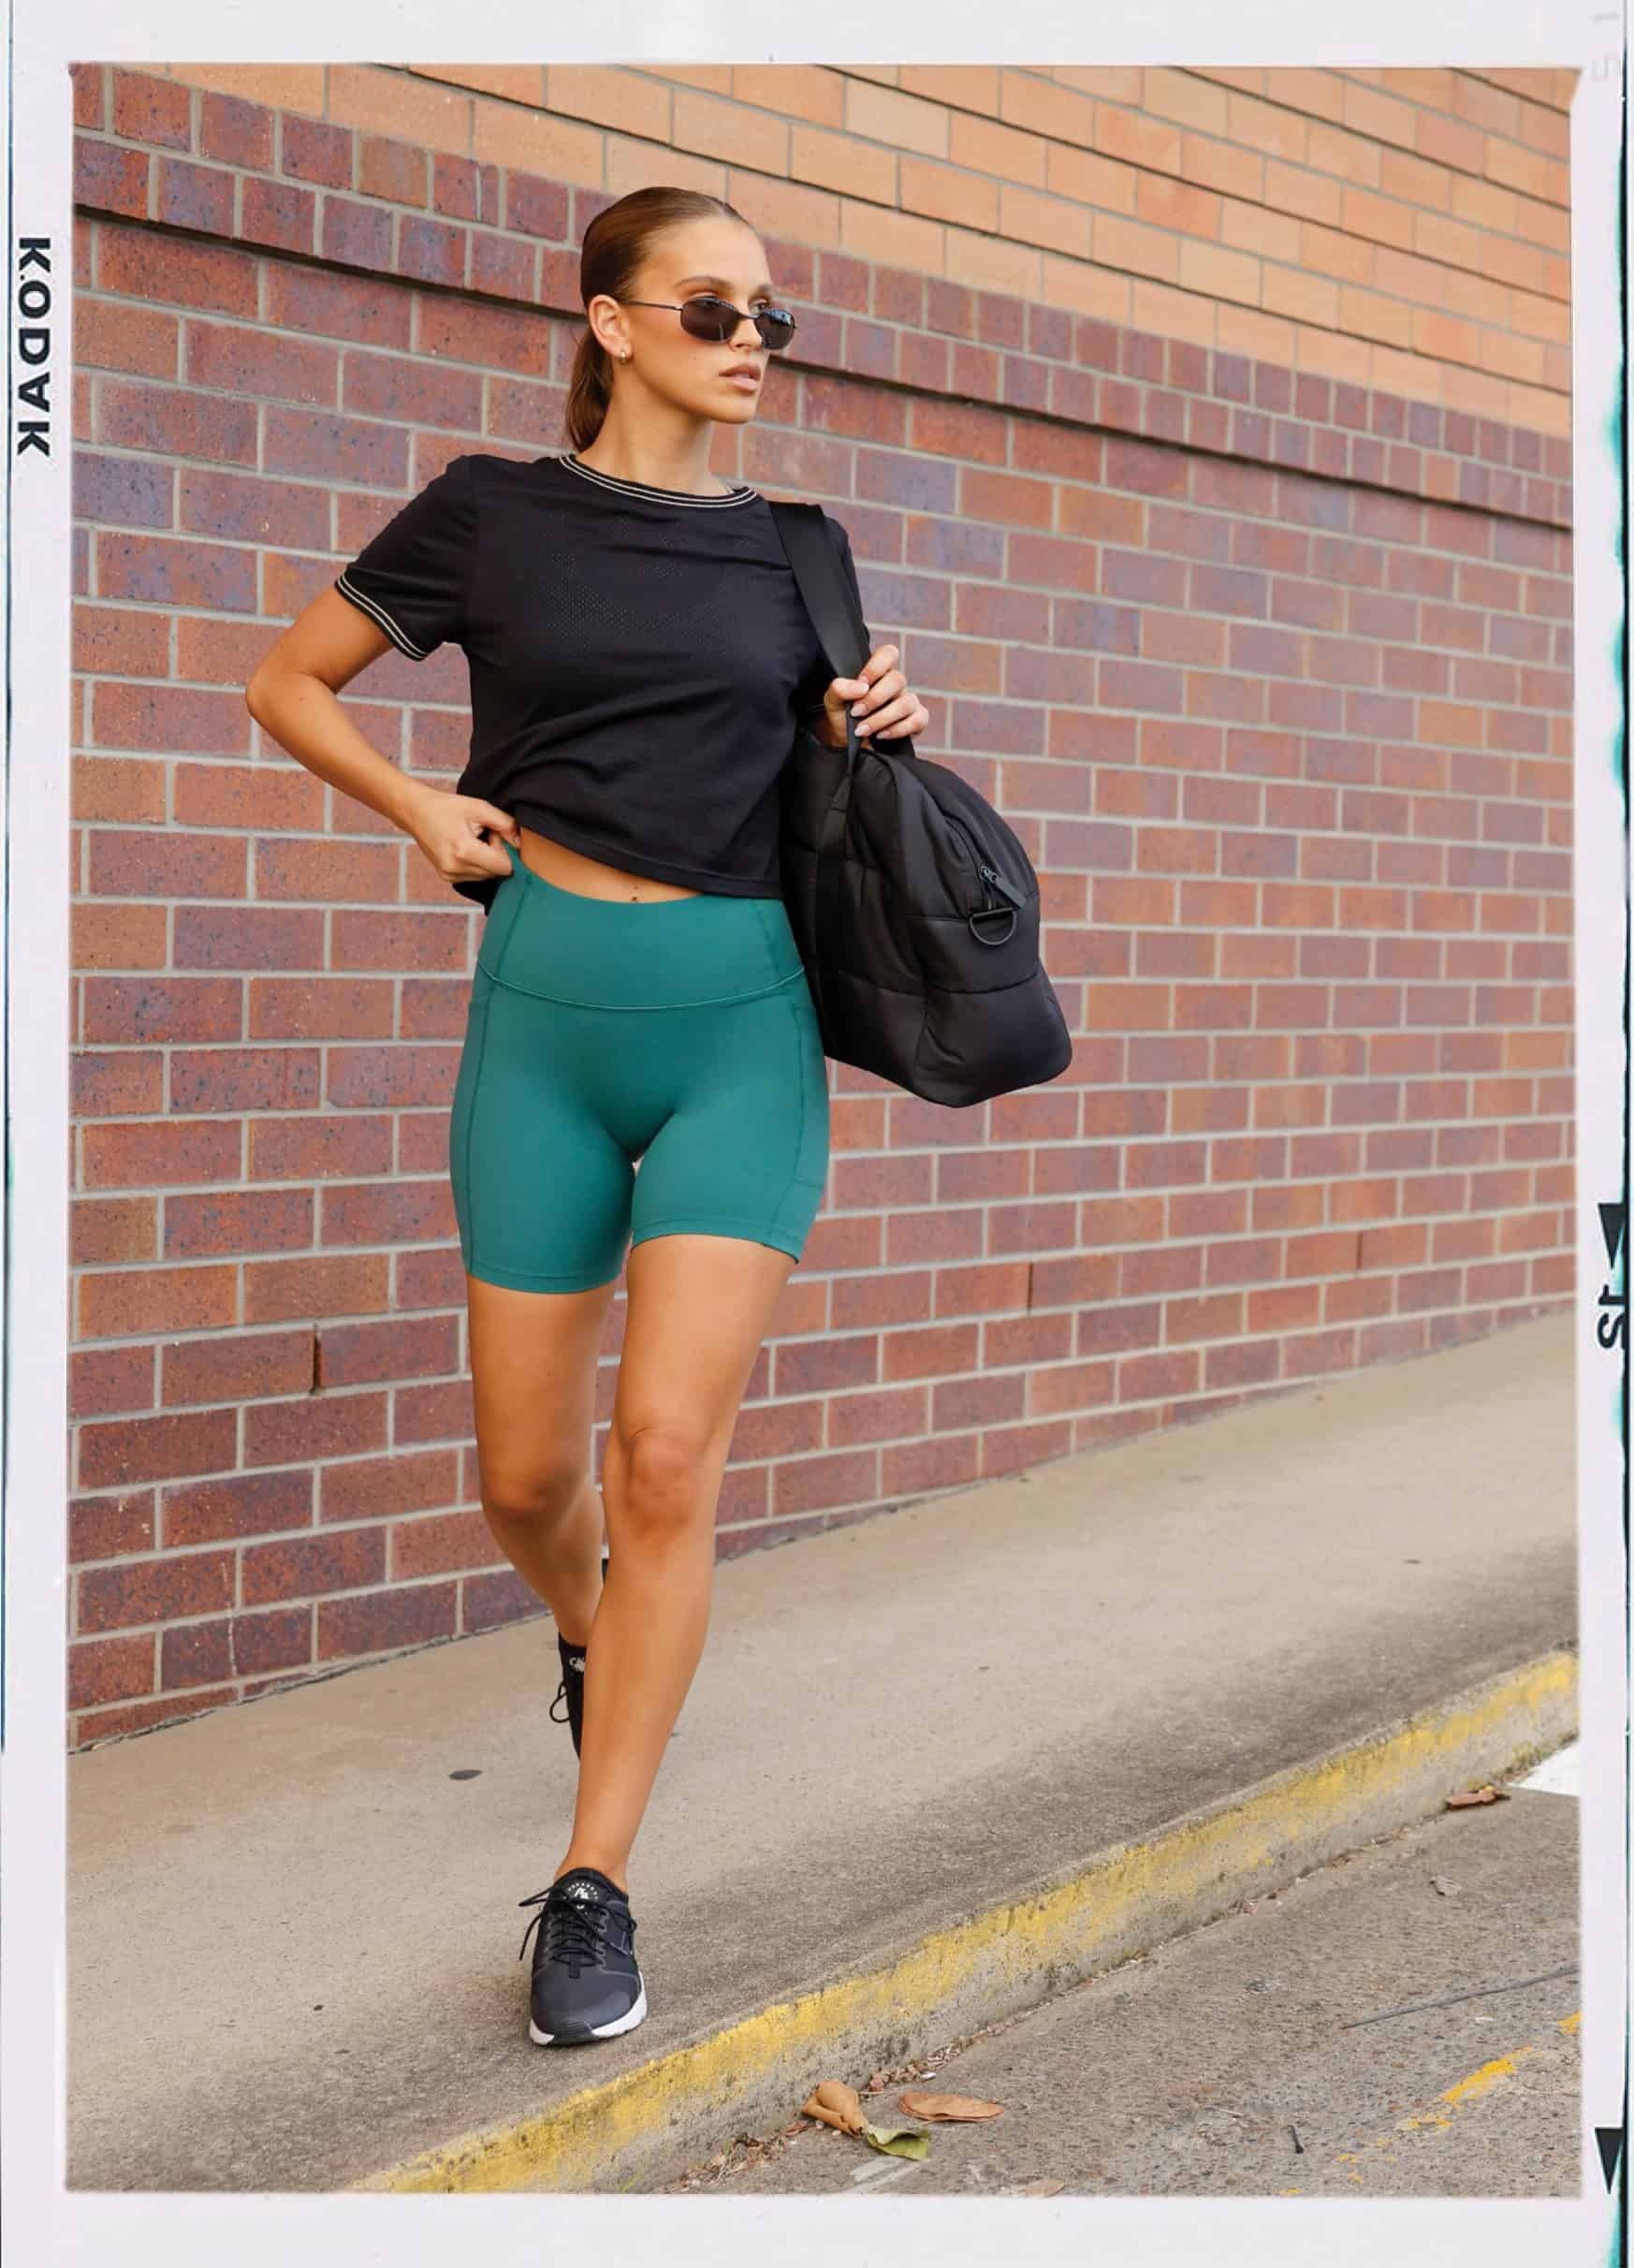 Image of model walking along the street wearing a black mesh tee with moss green bike shorts